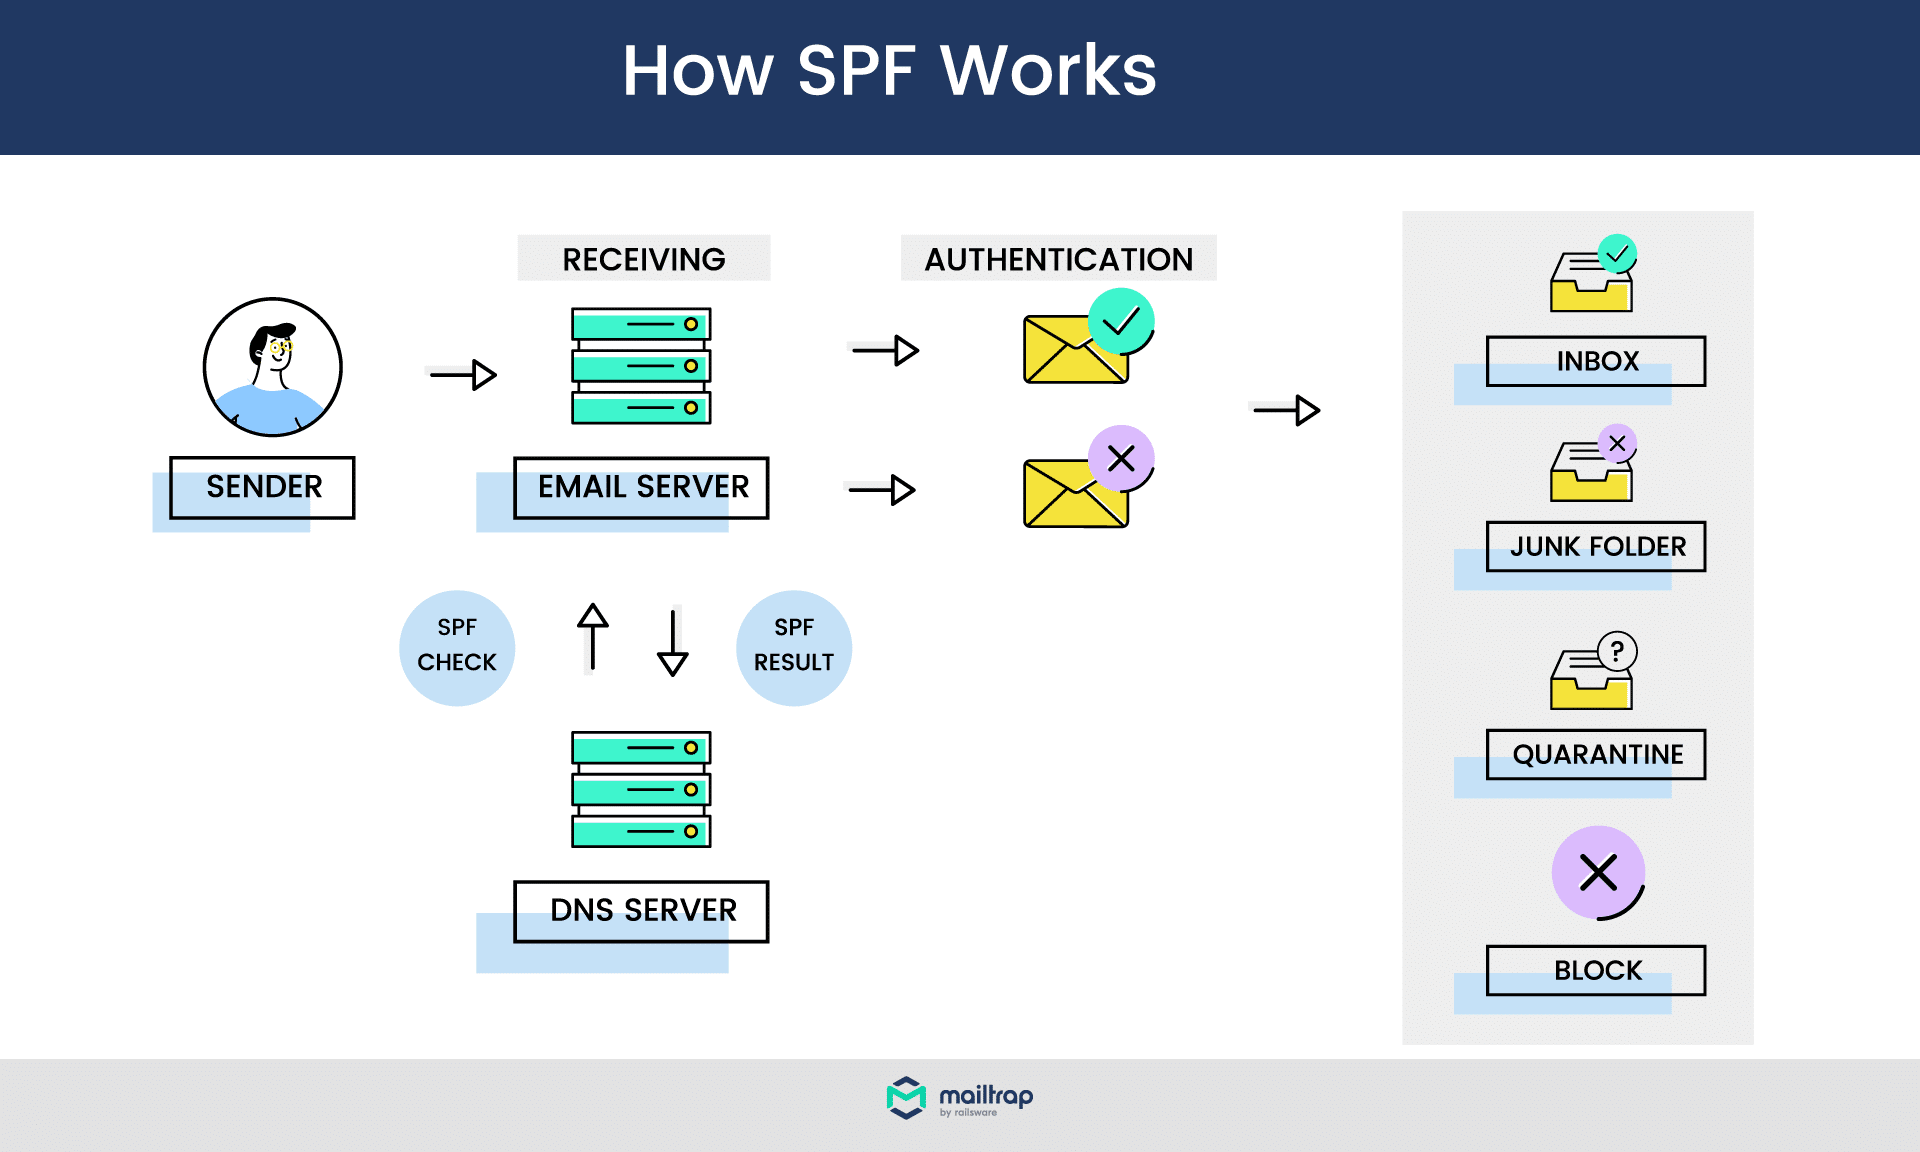 Illustration showing how SPF works